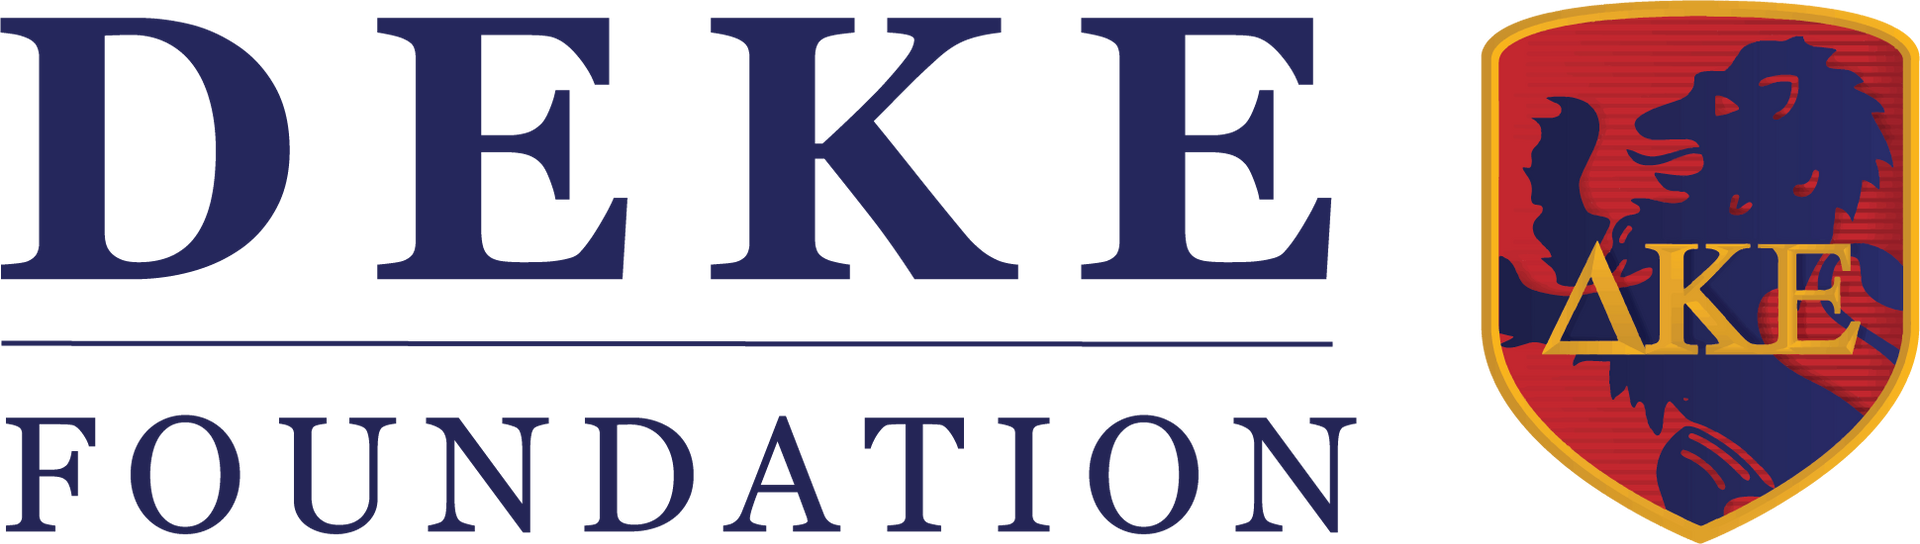 Deke Foundation Logo 